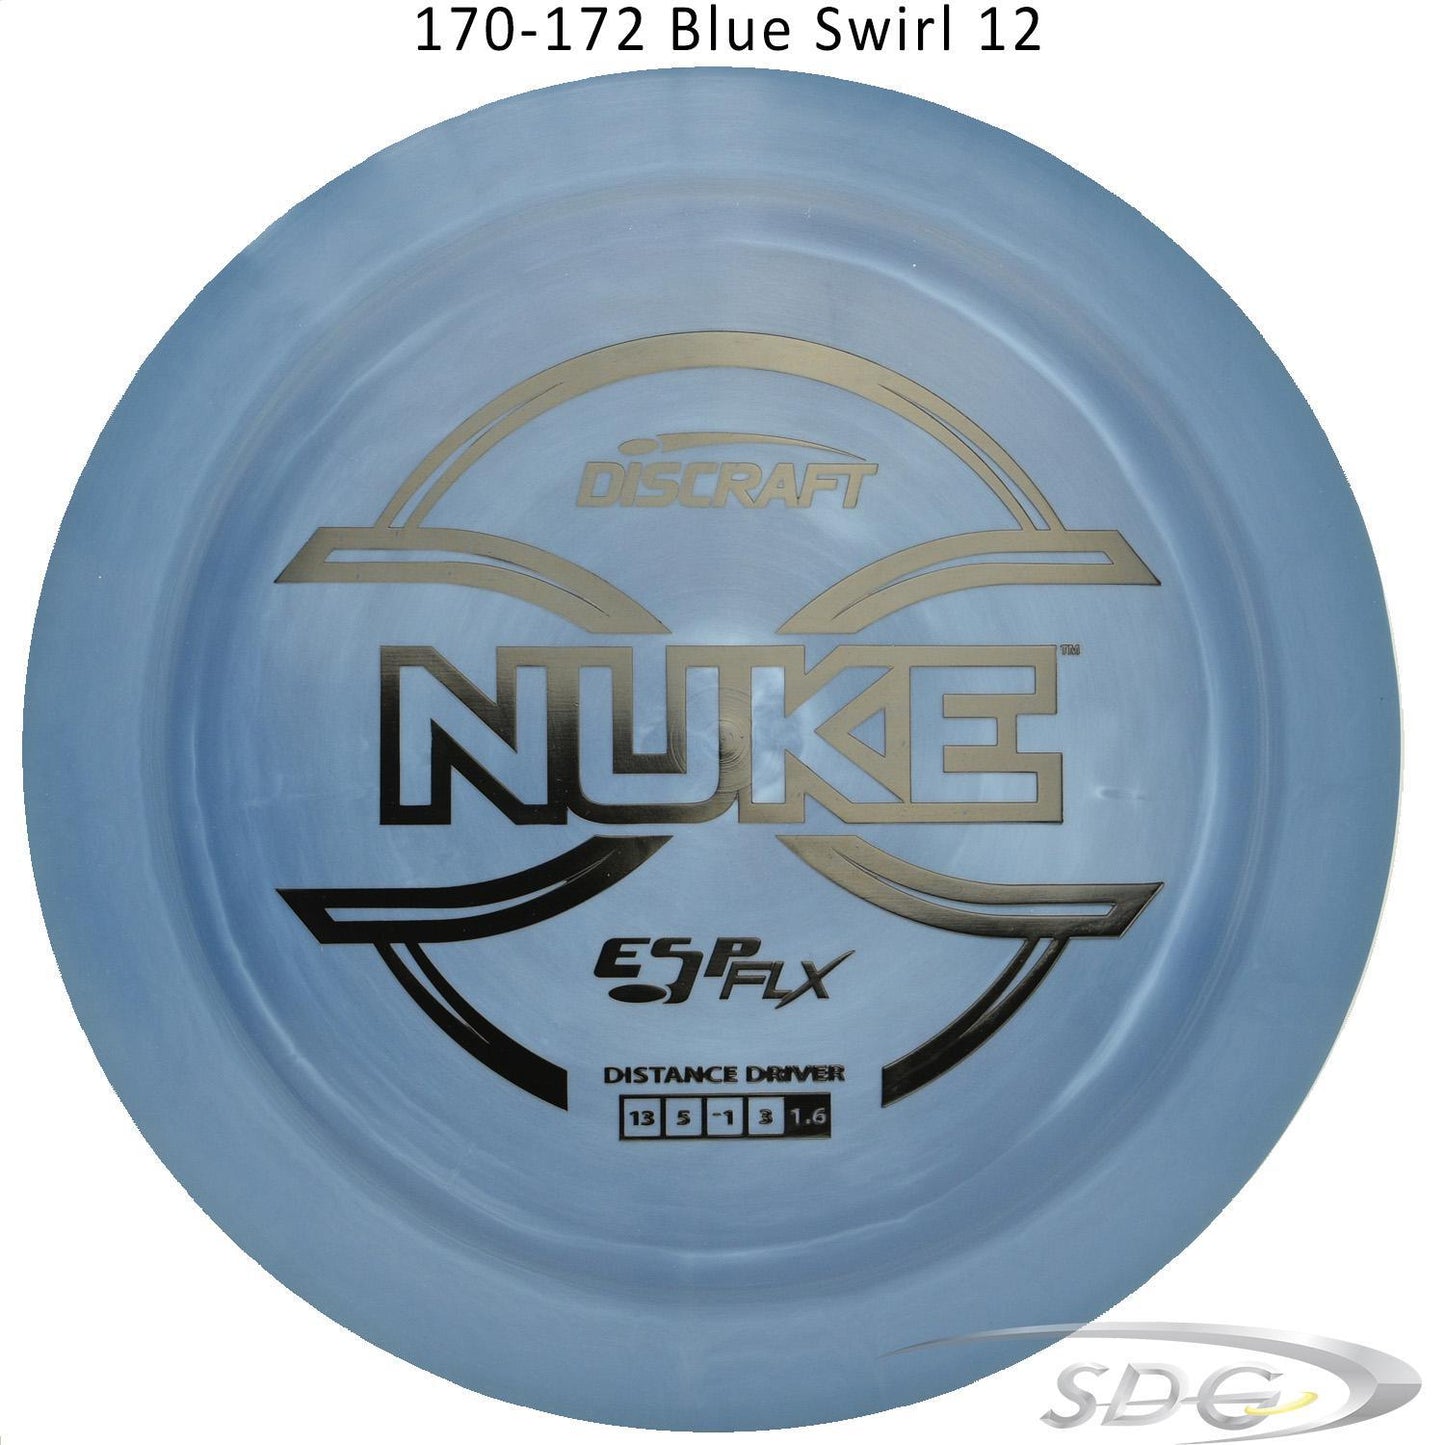 discraft-esp-flx-nuke-disc-golf-distance-driver 170-172 Blue Swirl 12